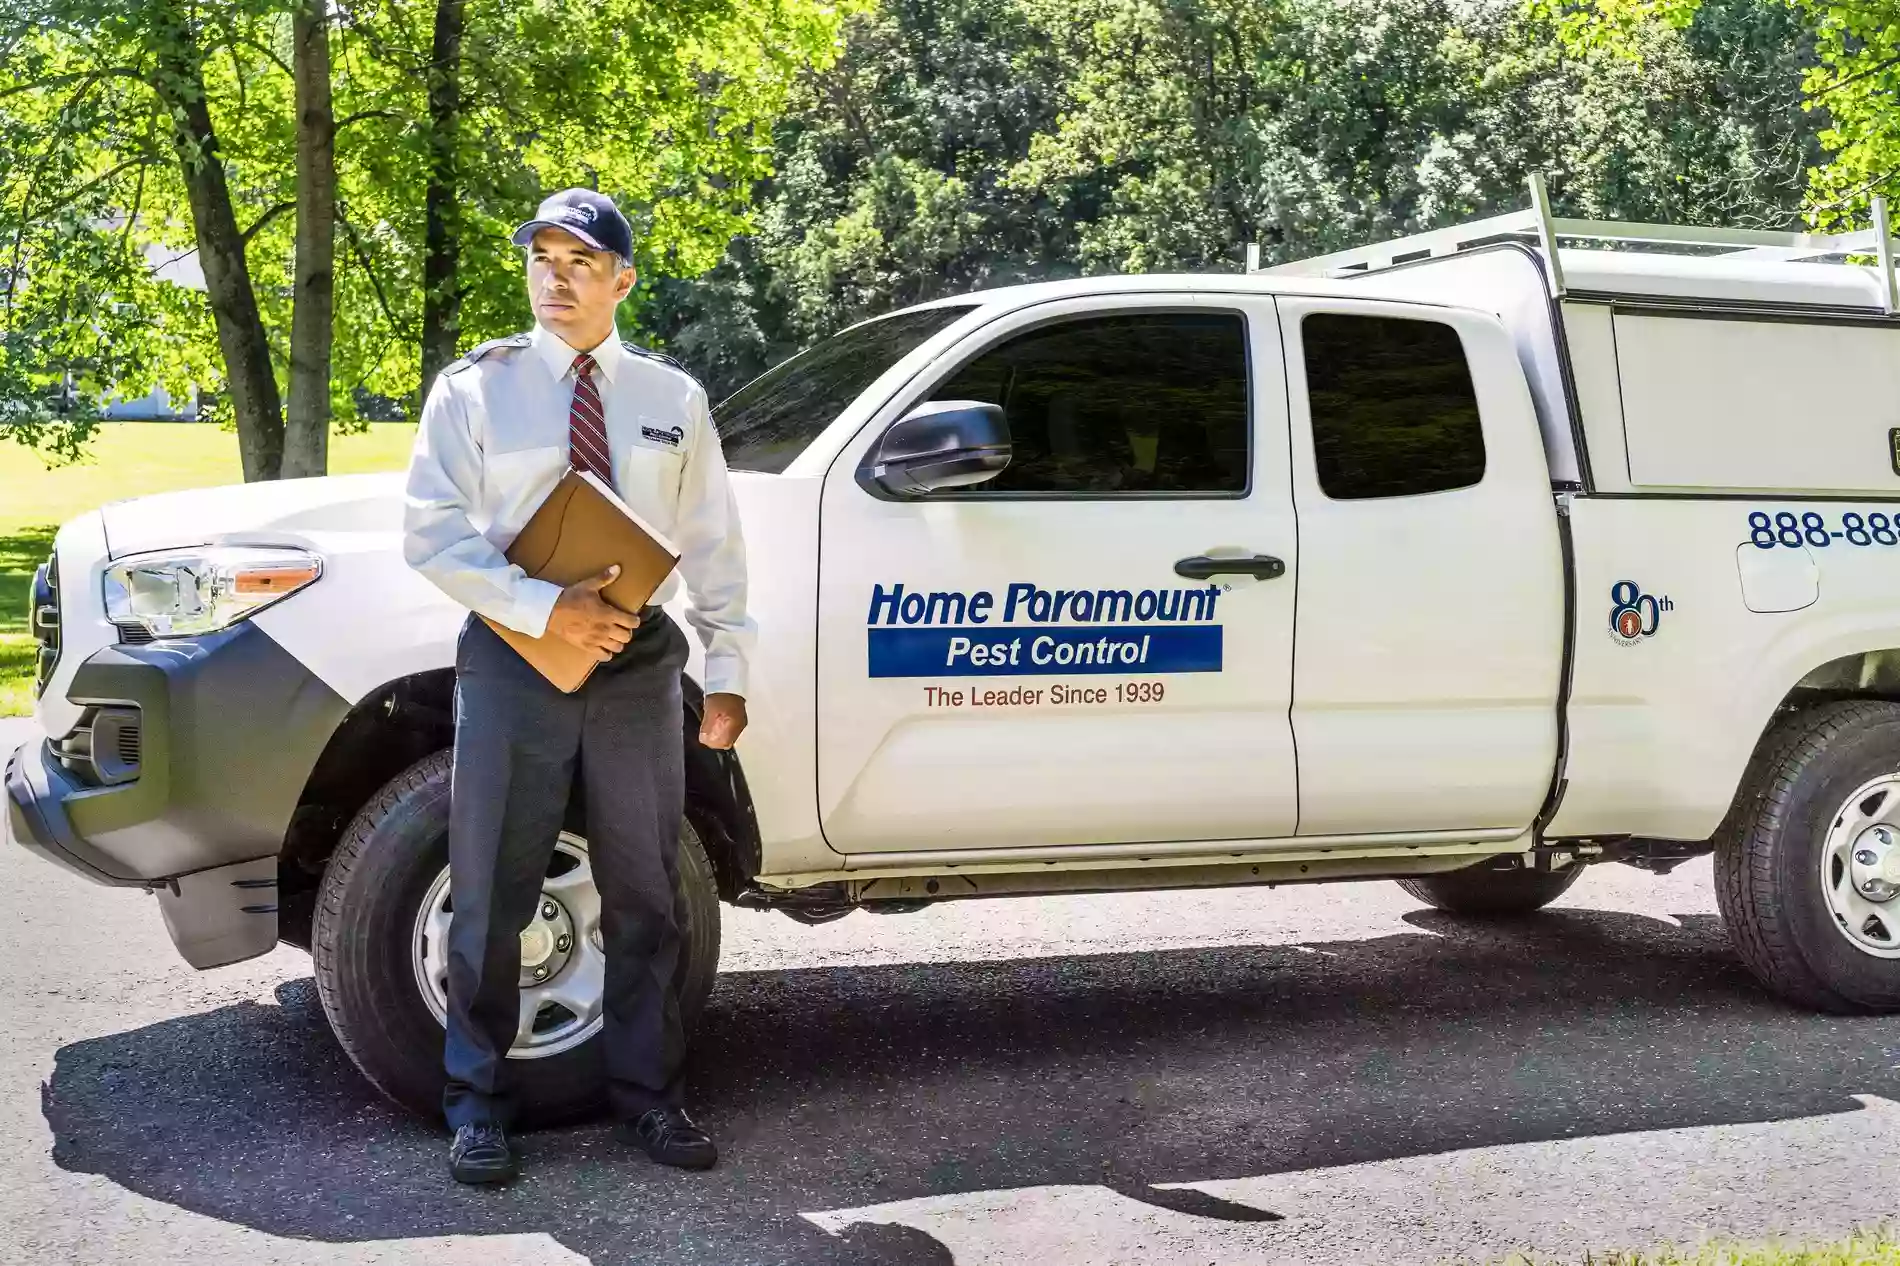 Home Paramount Pest Control Co